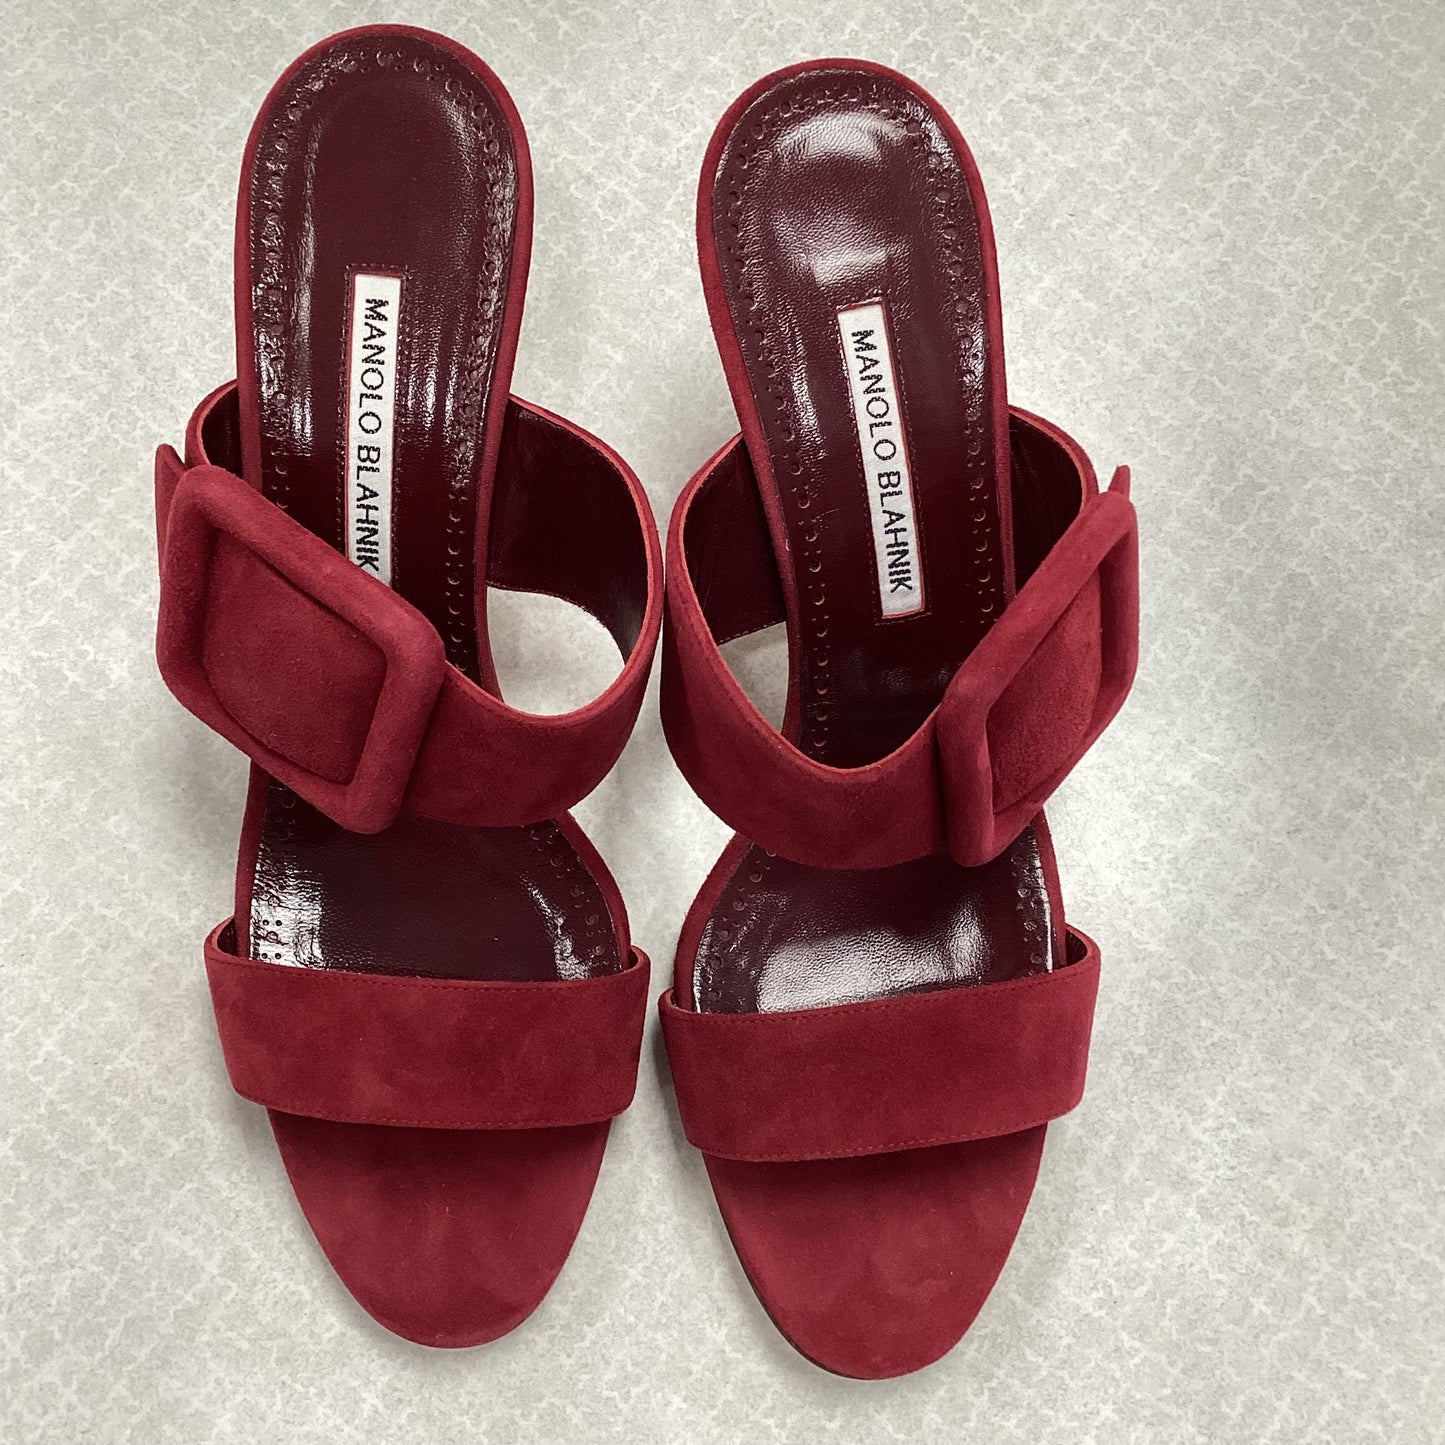 Sandals Heels Stiletto By Manolo Blahnik  Size: 9